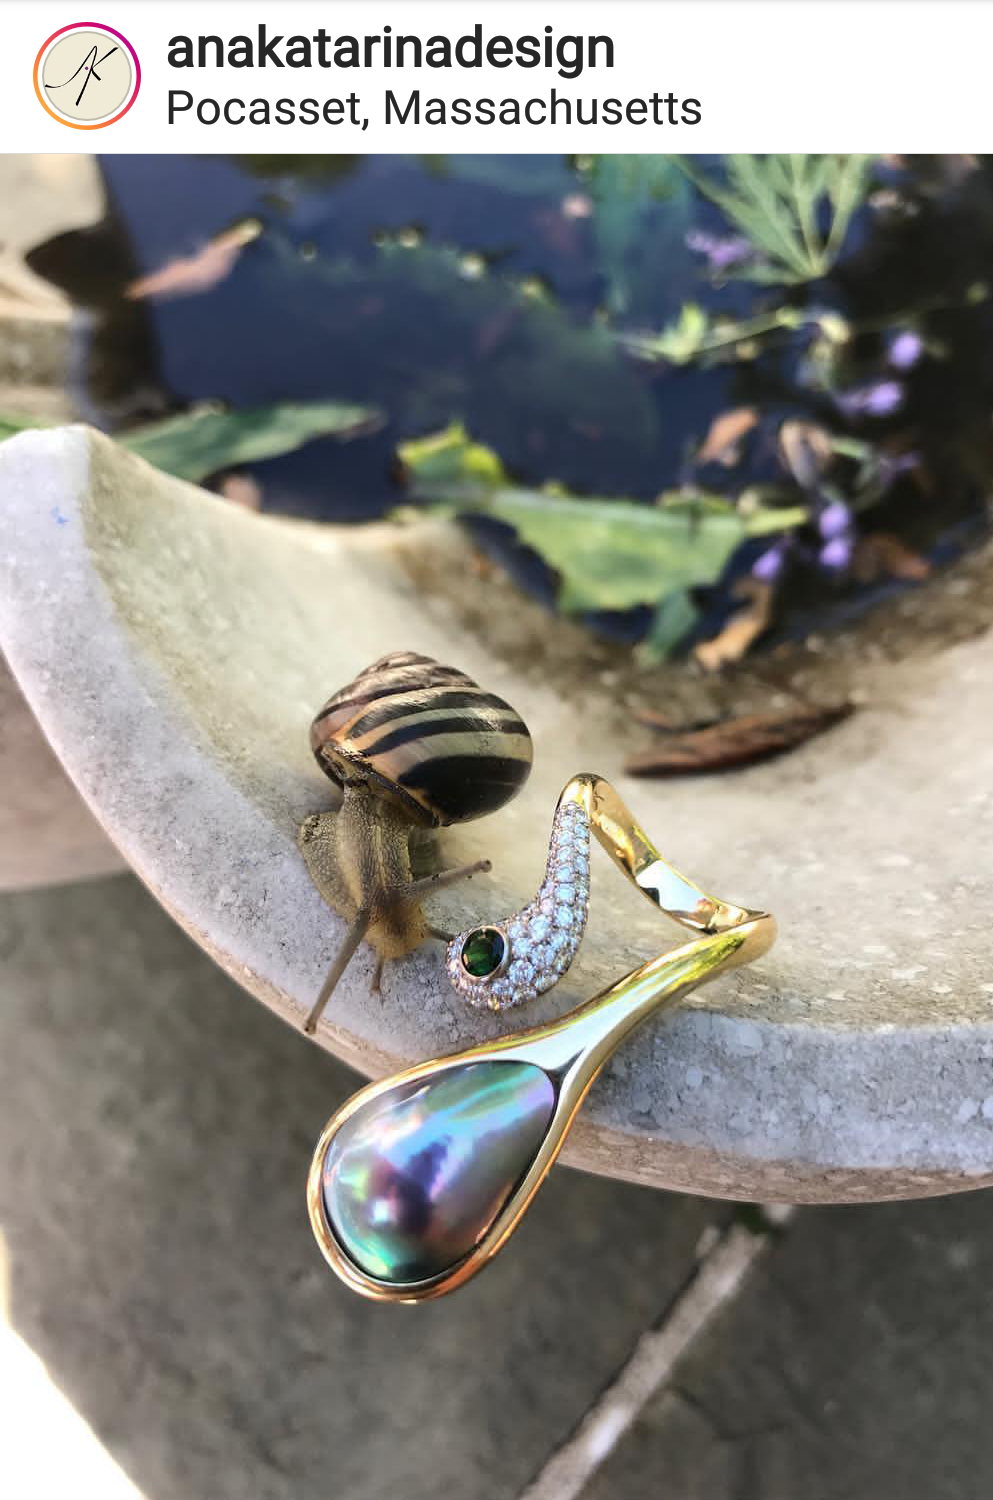 Gem grade “Cortez Mabe” pearl set in a unique ring design by Ana Katarina Design